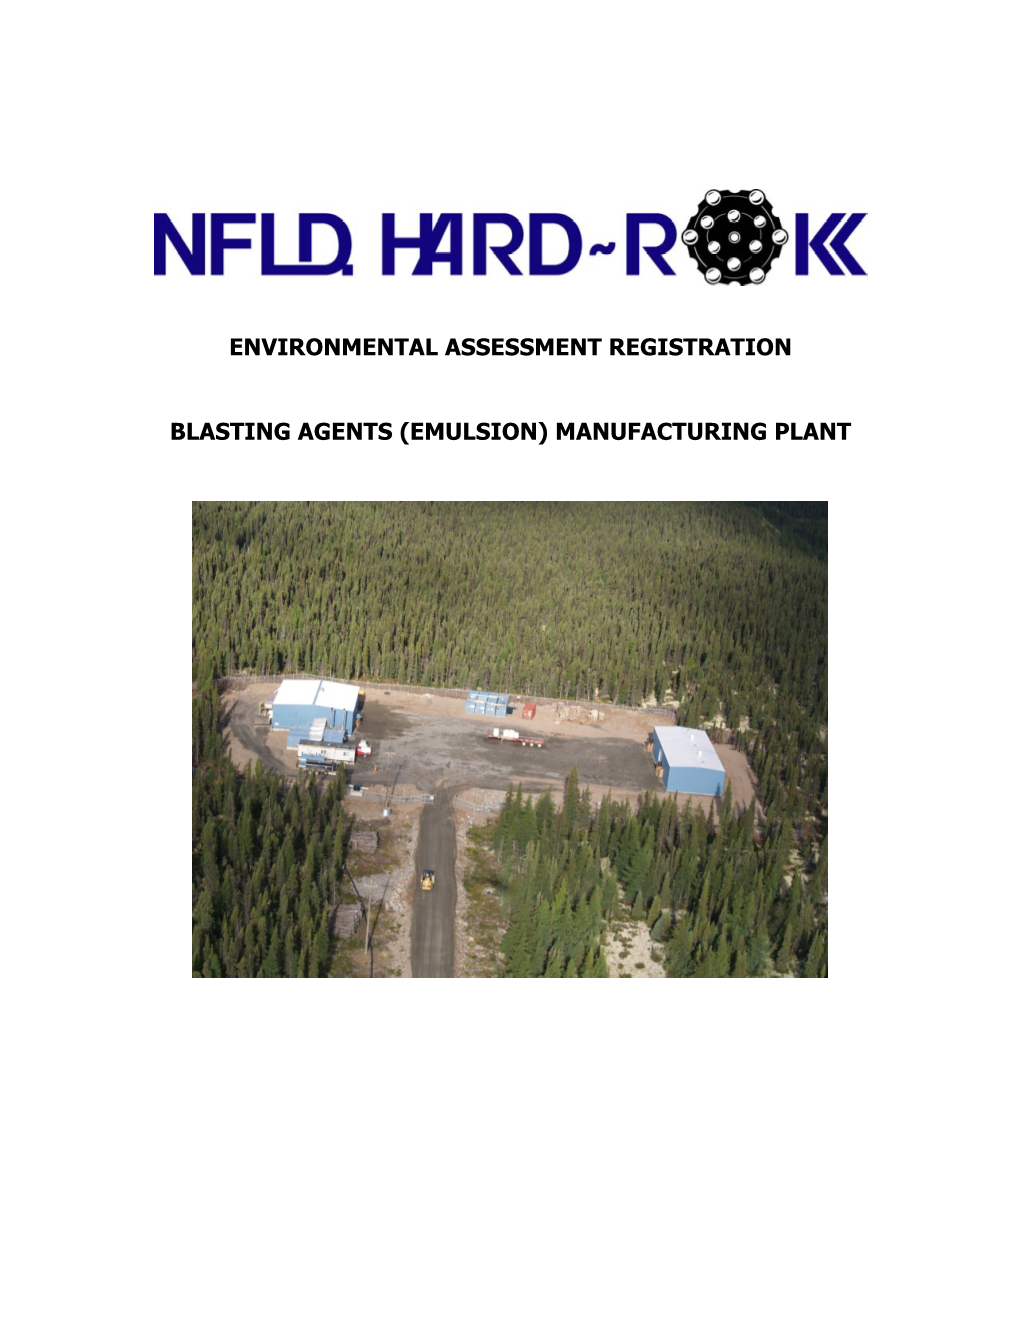 Environmental Assessment Registration Blasting Agents (Emulsion) Manufacturing Plant